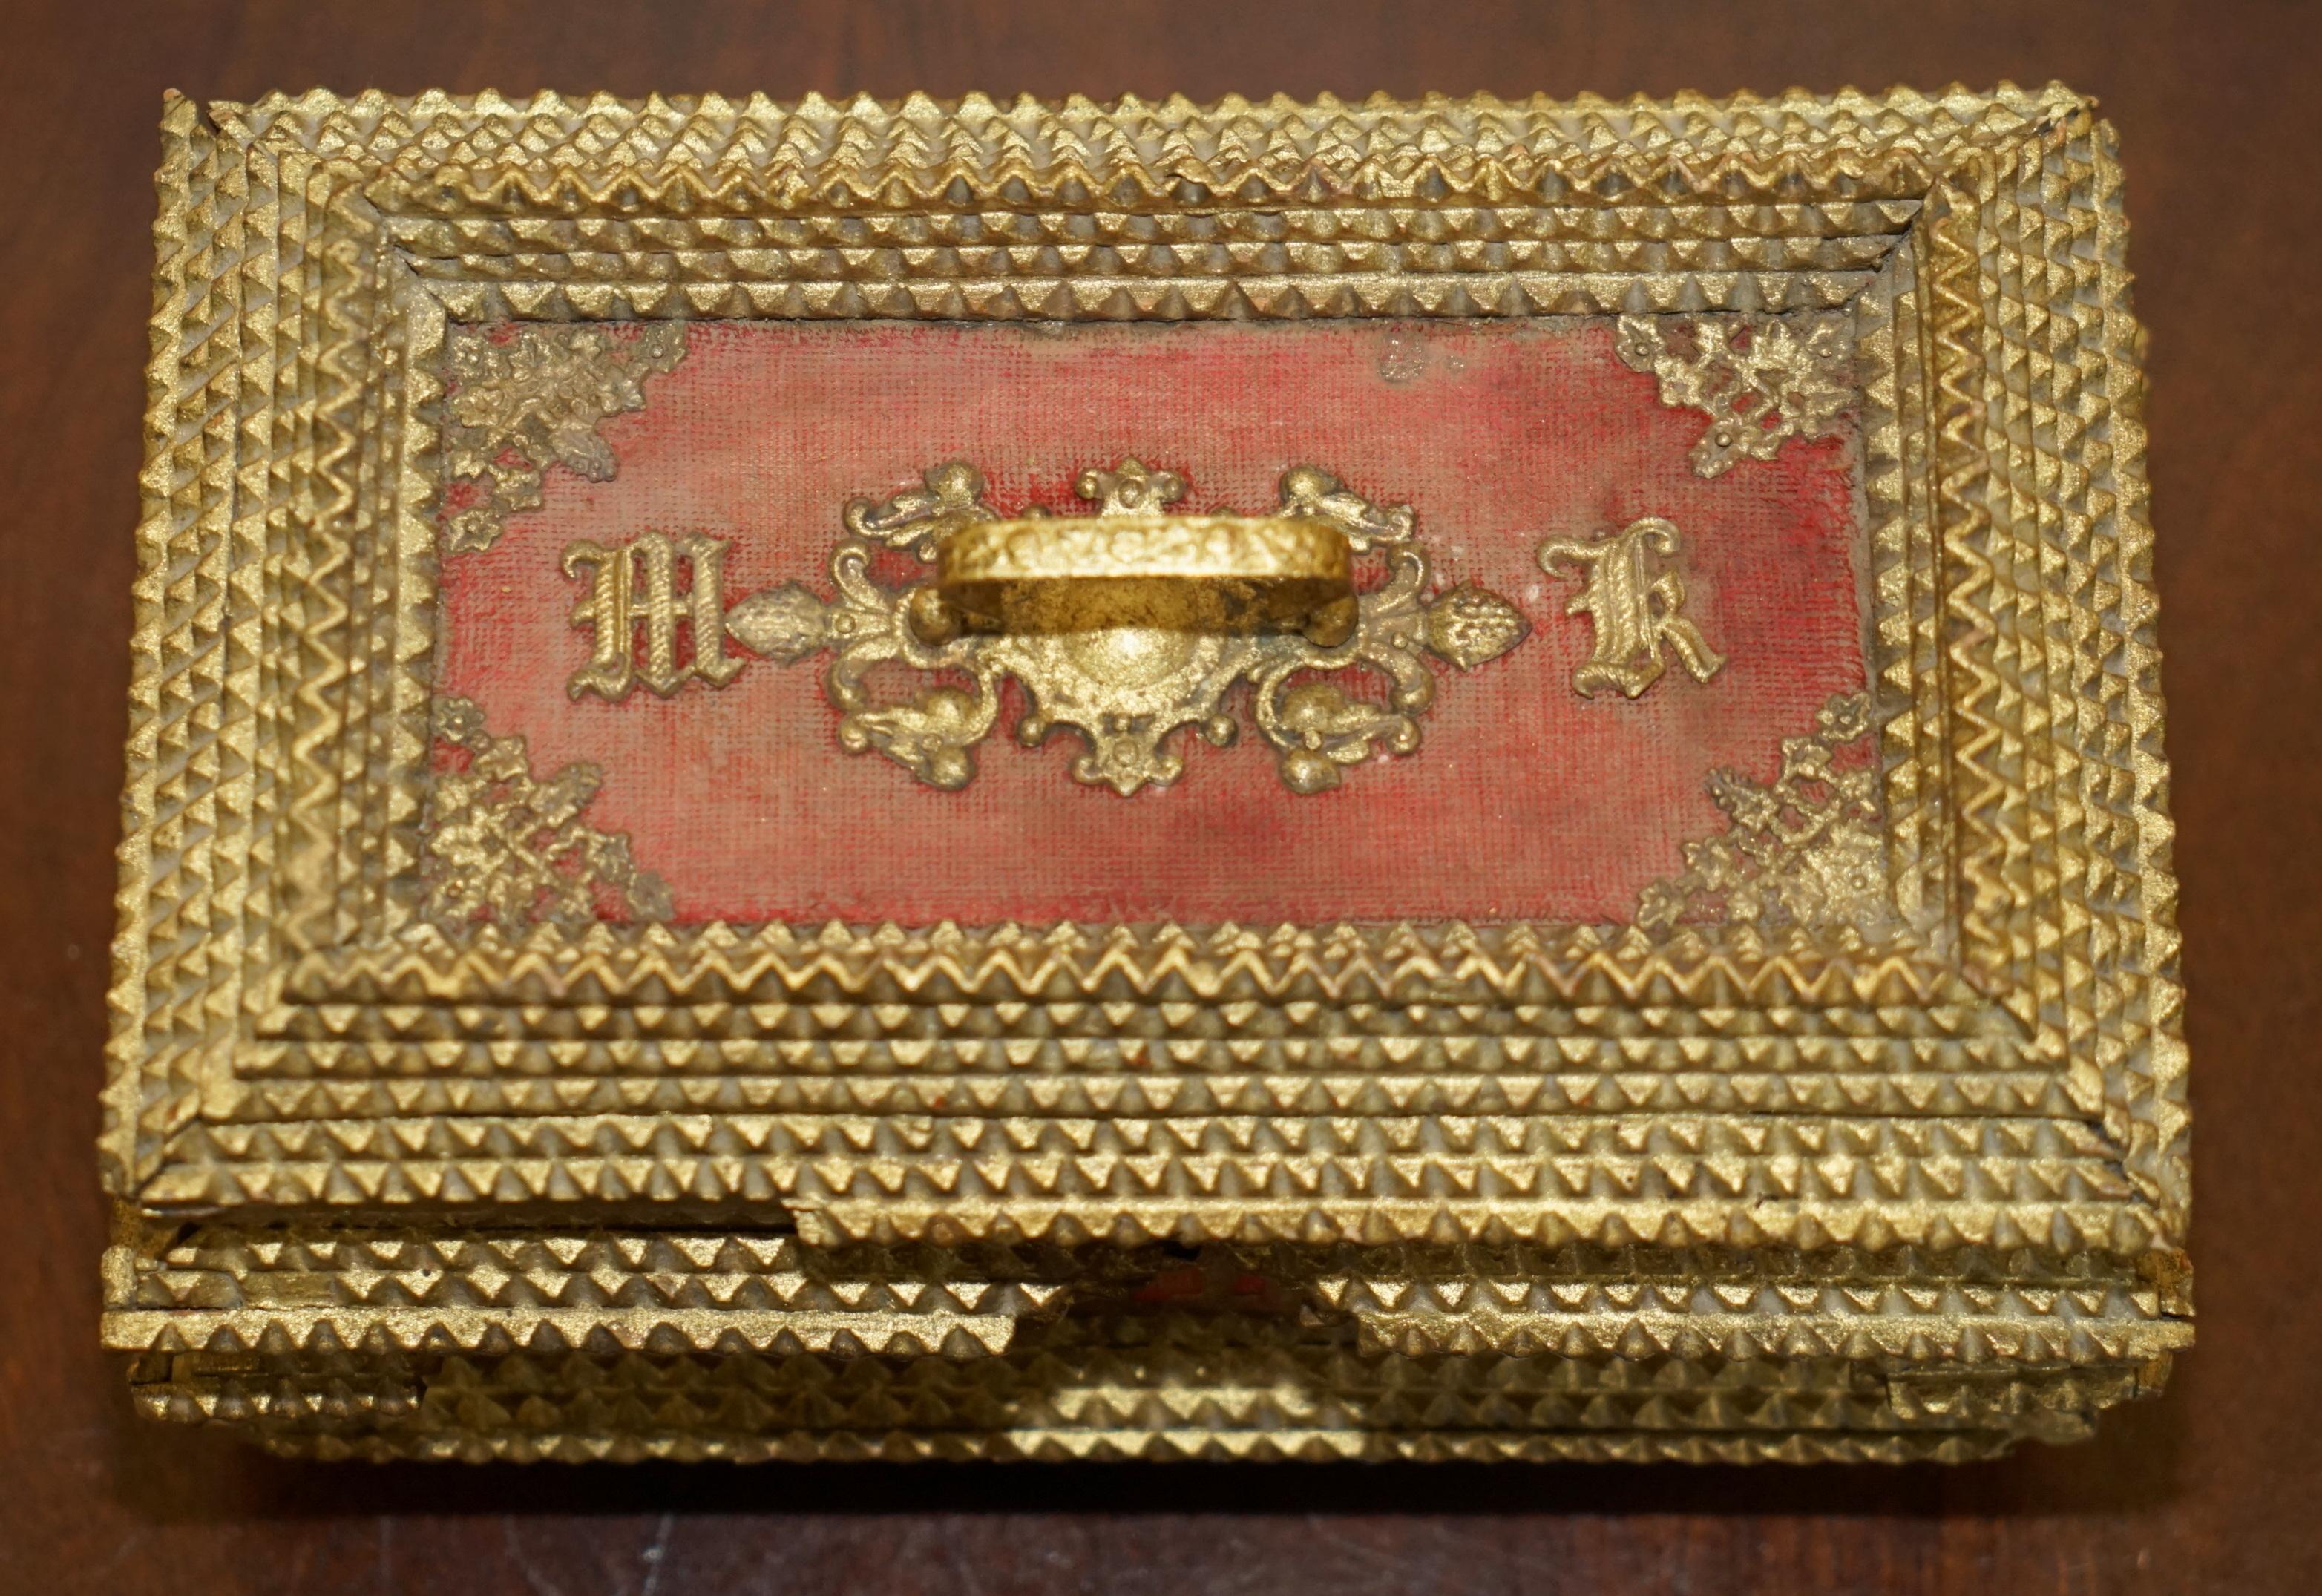 1896 DATED TRAMP ART JEWELLERY BOX ZUM ANDENKEN / IN MEMORY OF JEWELLERY BOx For Sale 3